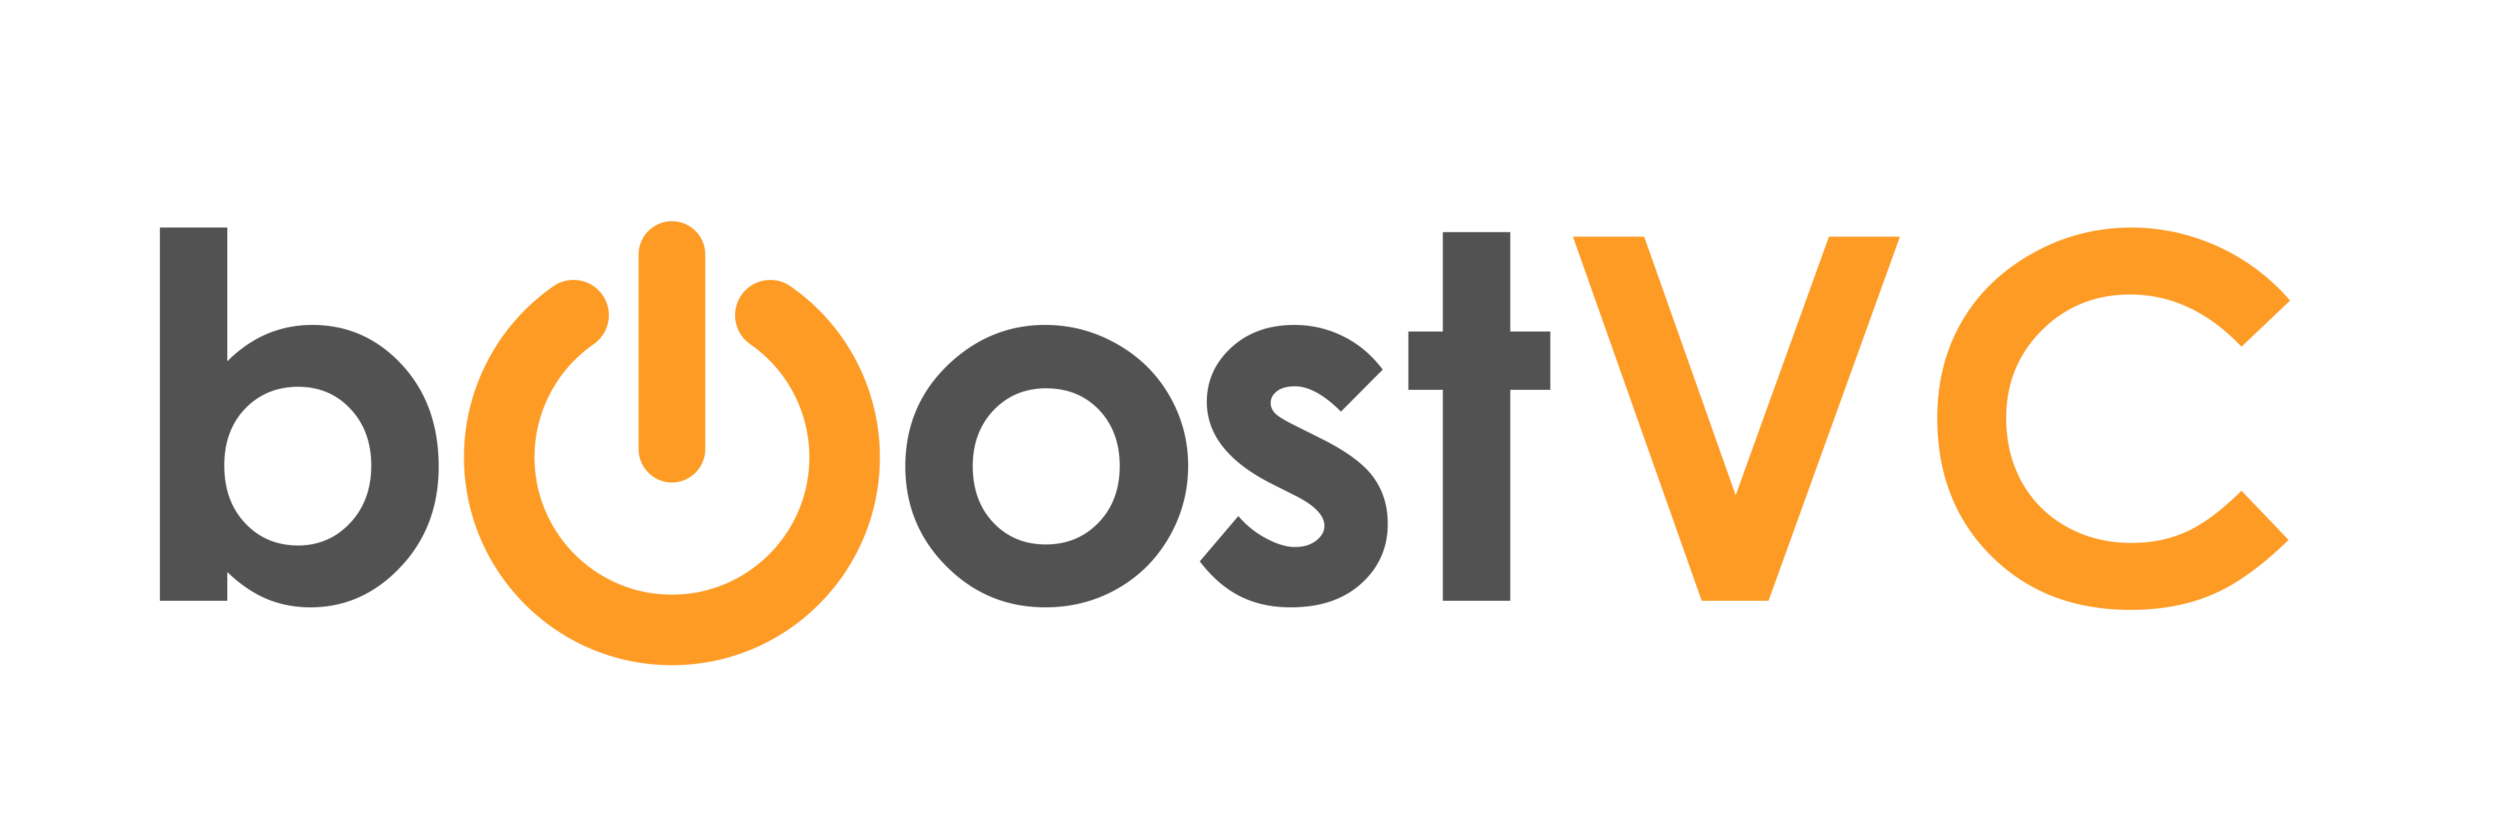 boost-vc-logo.png